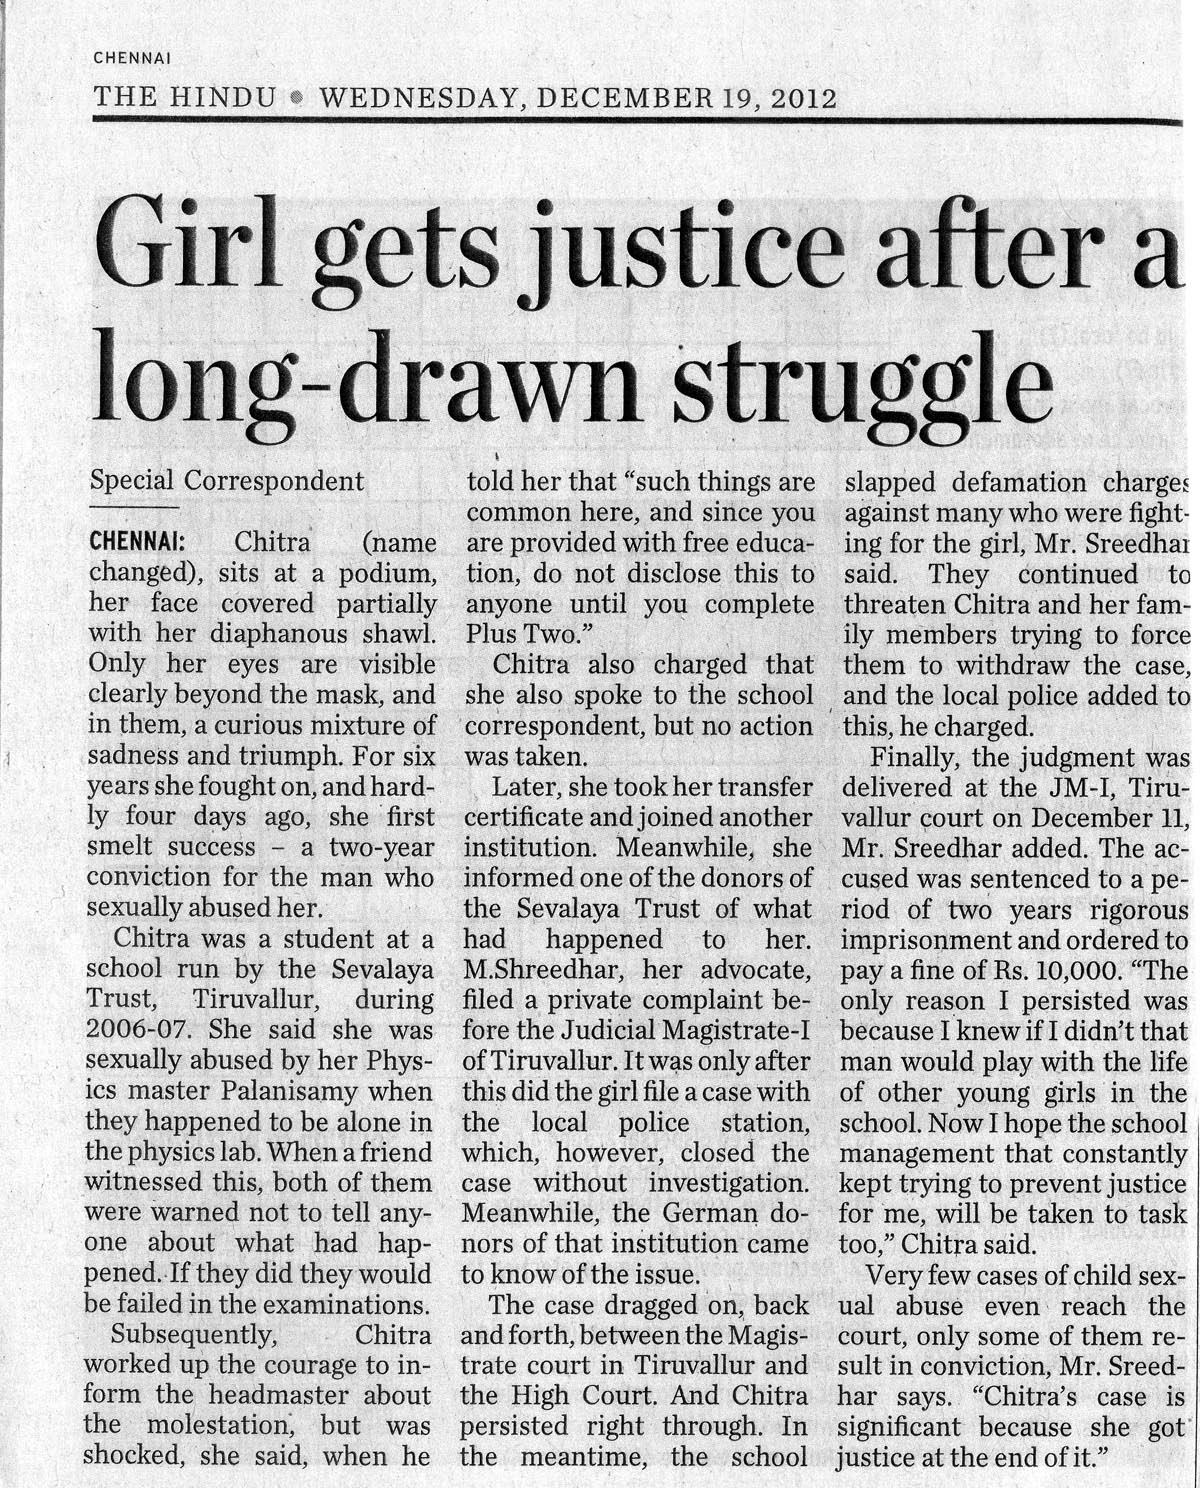 Article in The Hindu Dec 2012